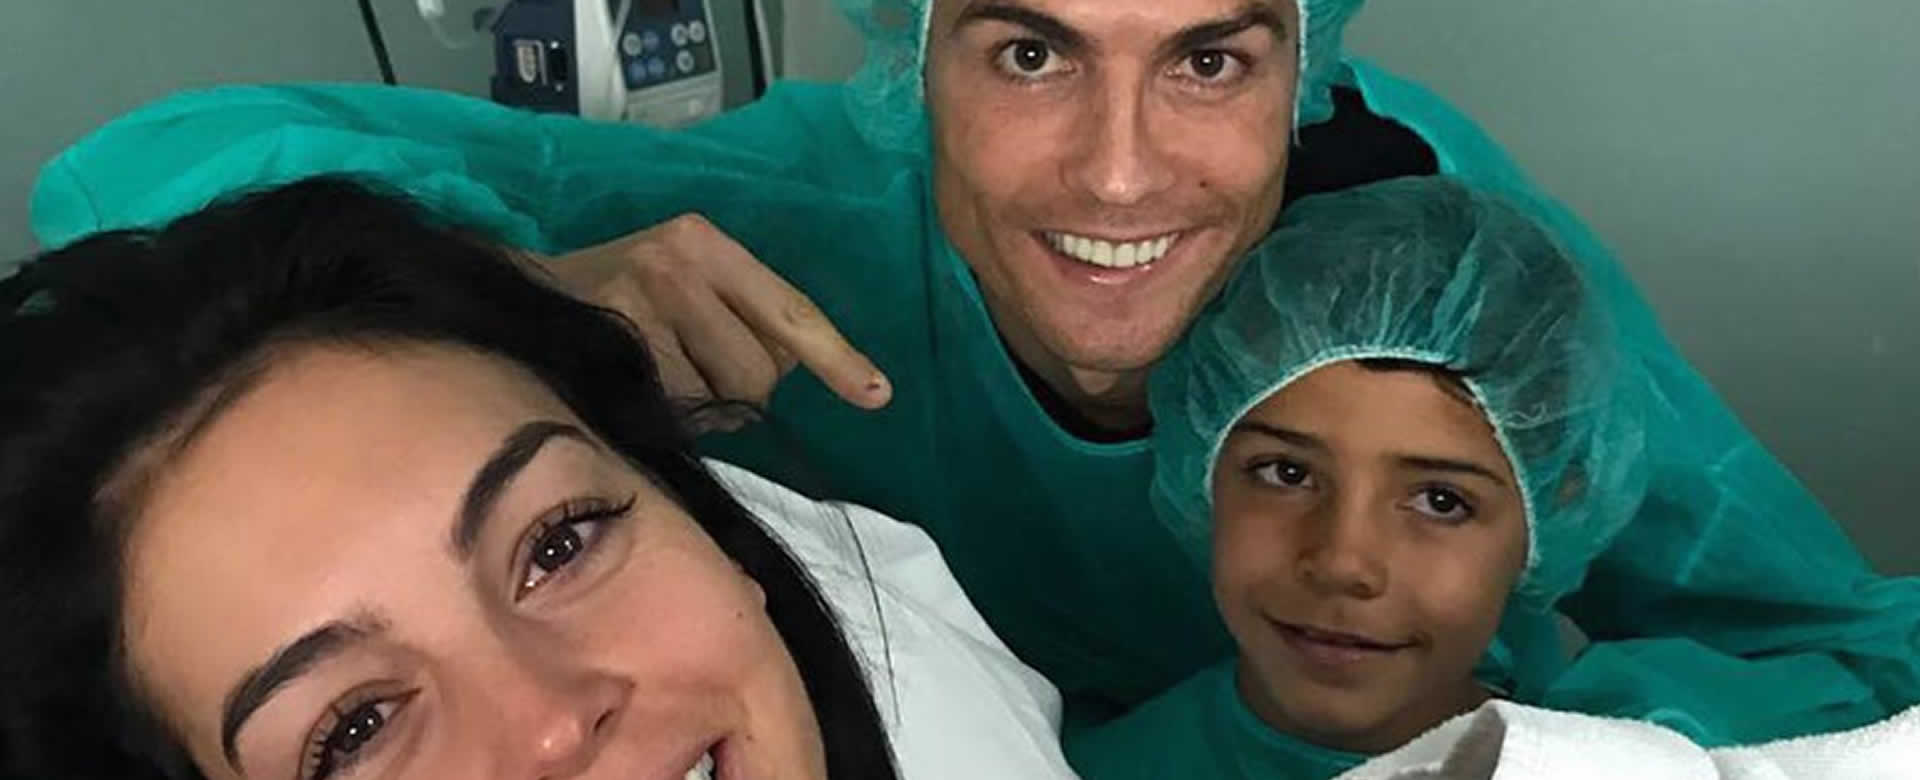 Nace Alana Martina, hija de Cristiano Ronaldo